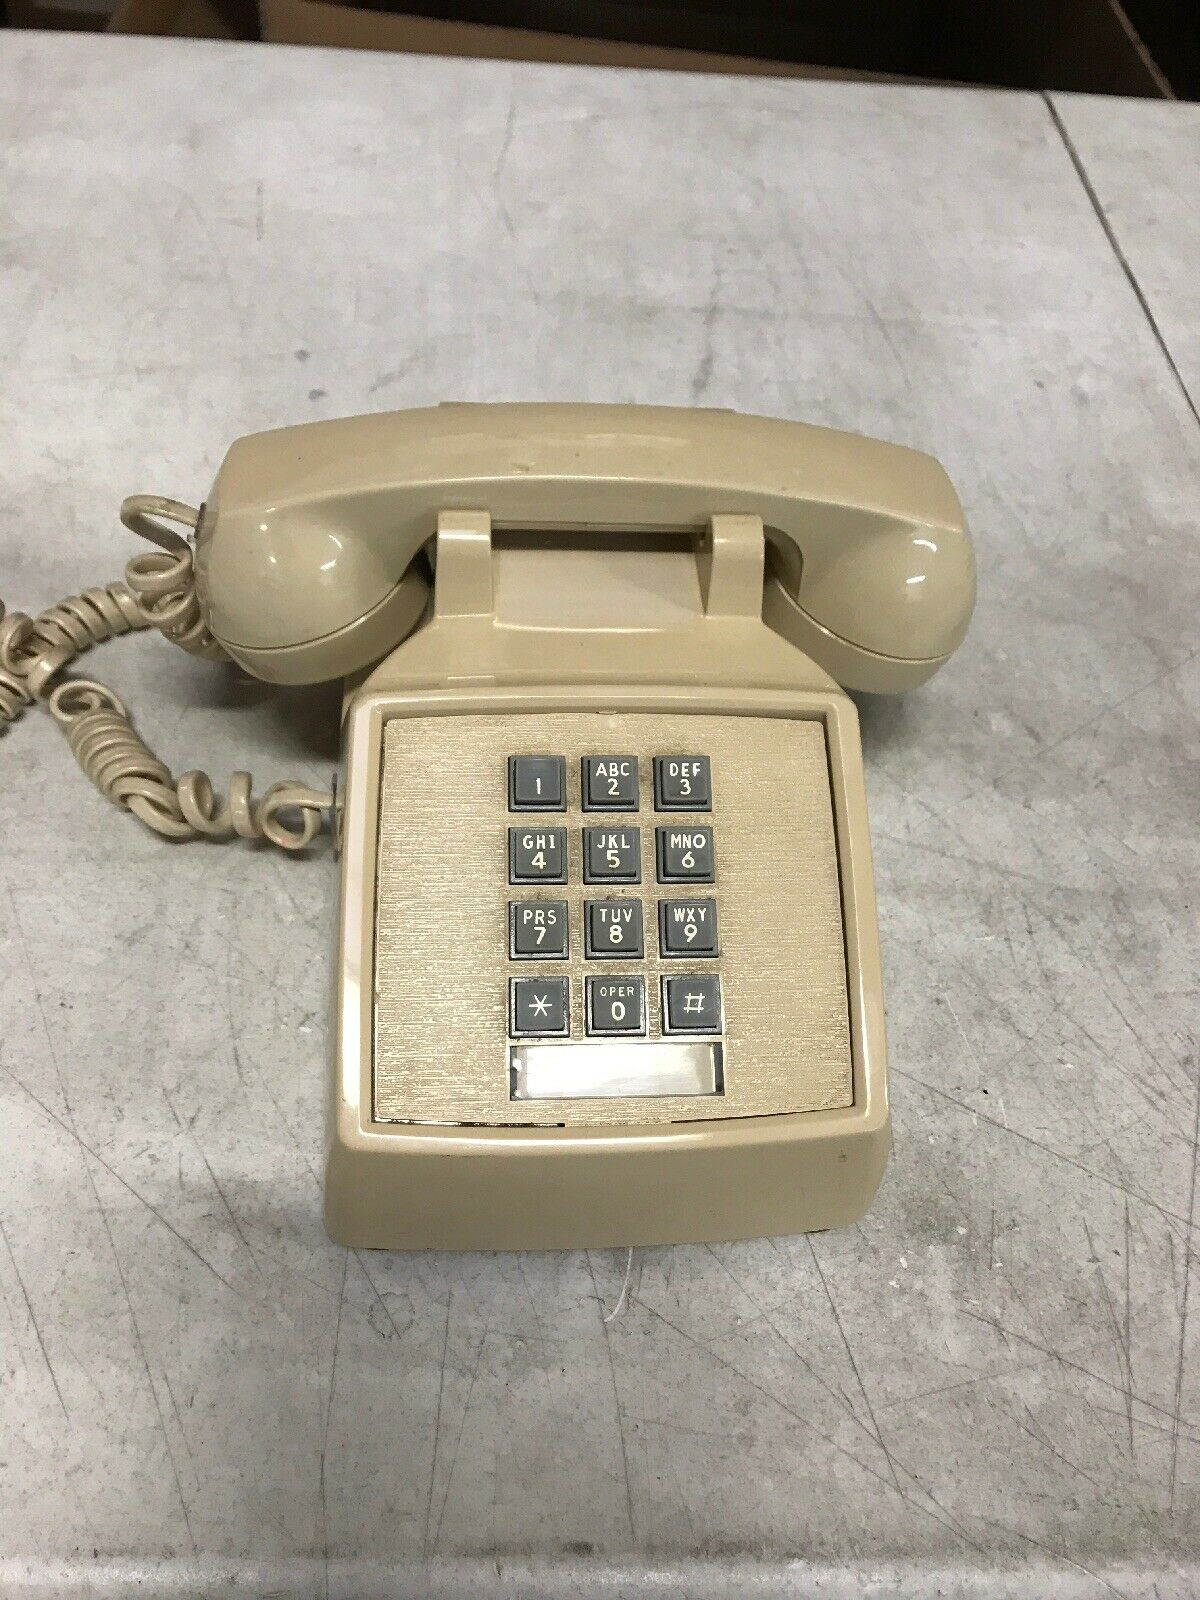 ITT Vintage phone 250044-mba-20m 6-95 RJ11C